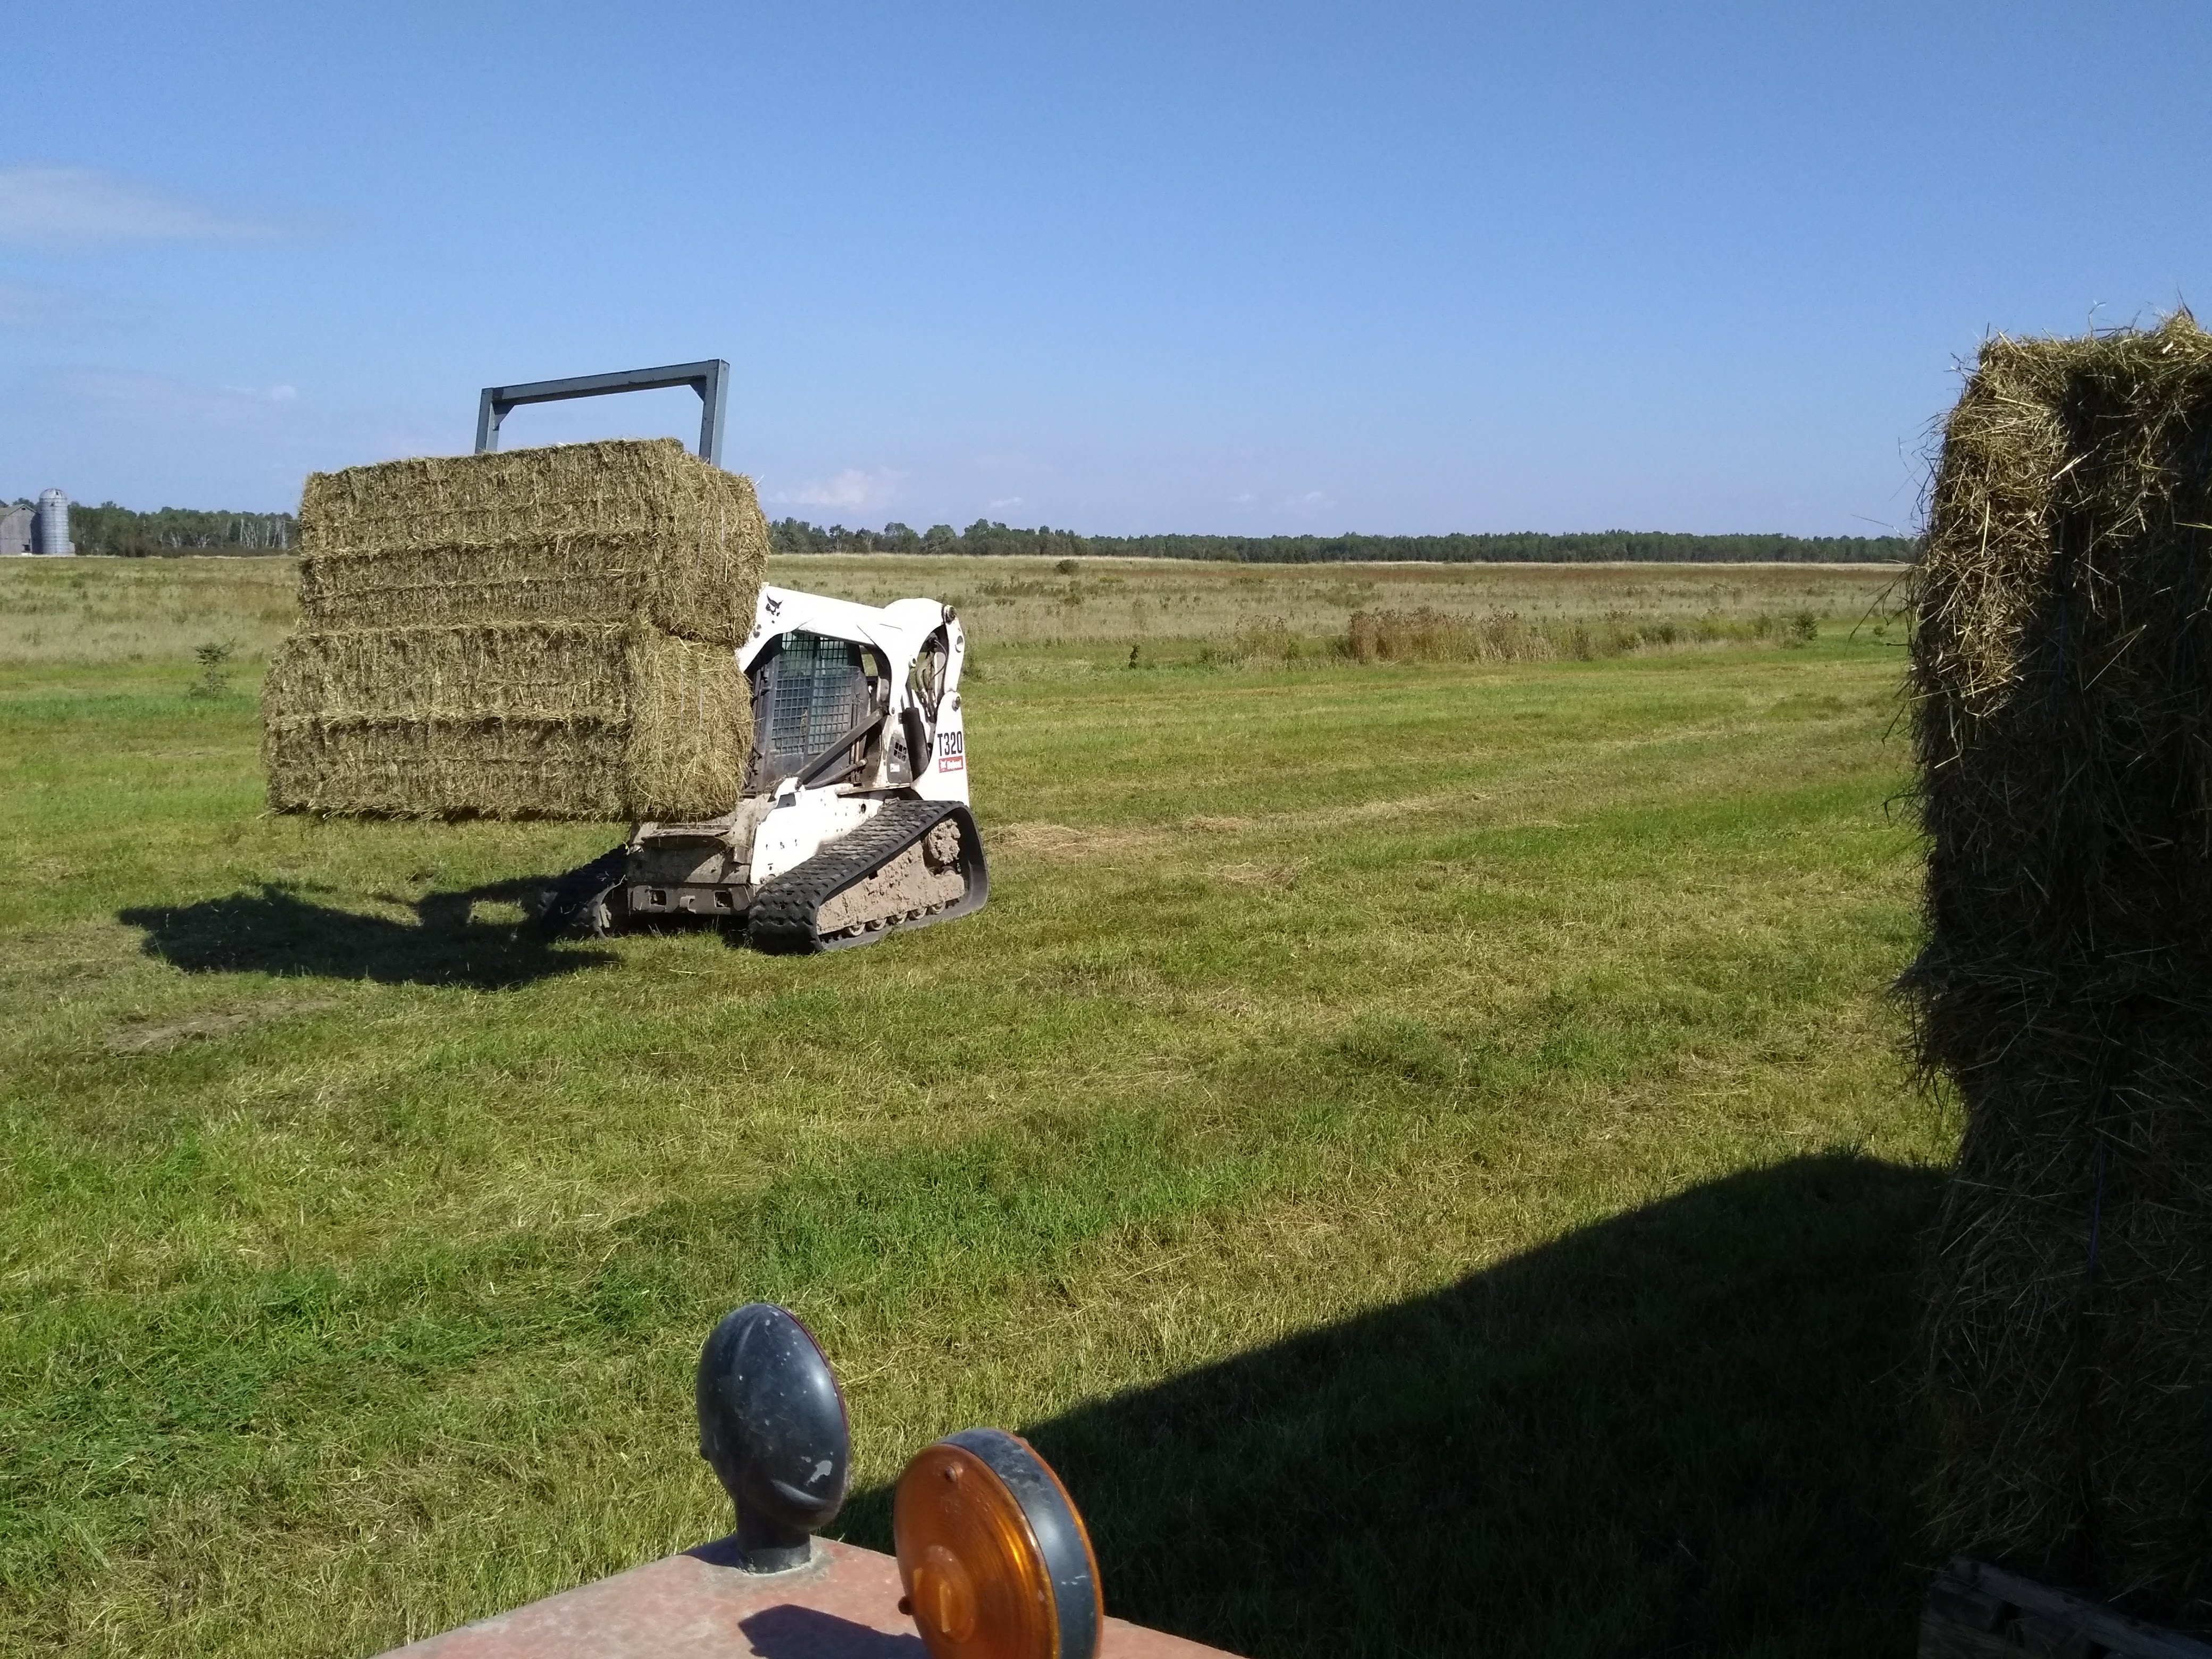 skid steer moving large hay bales in a field